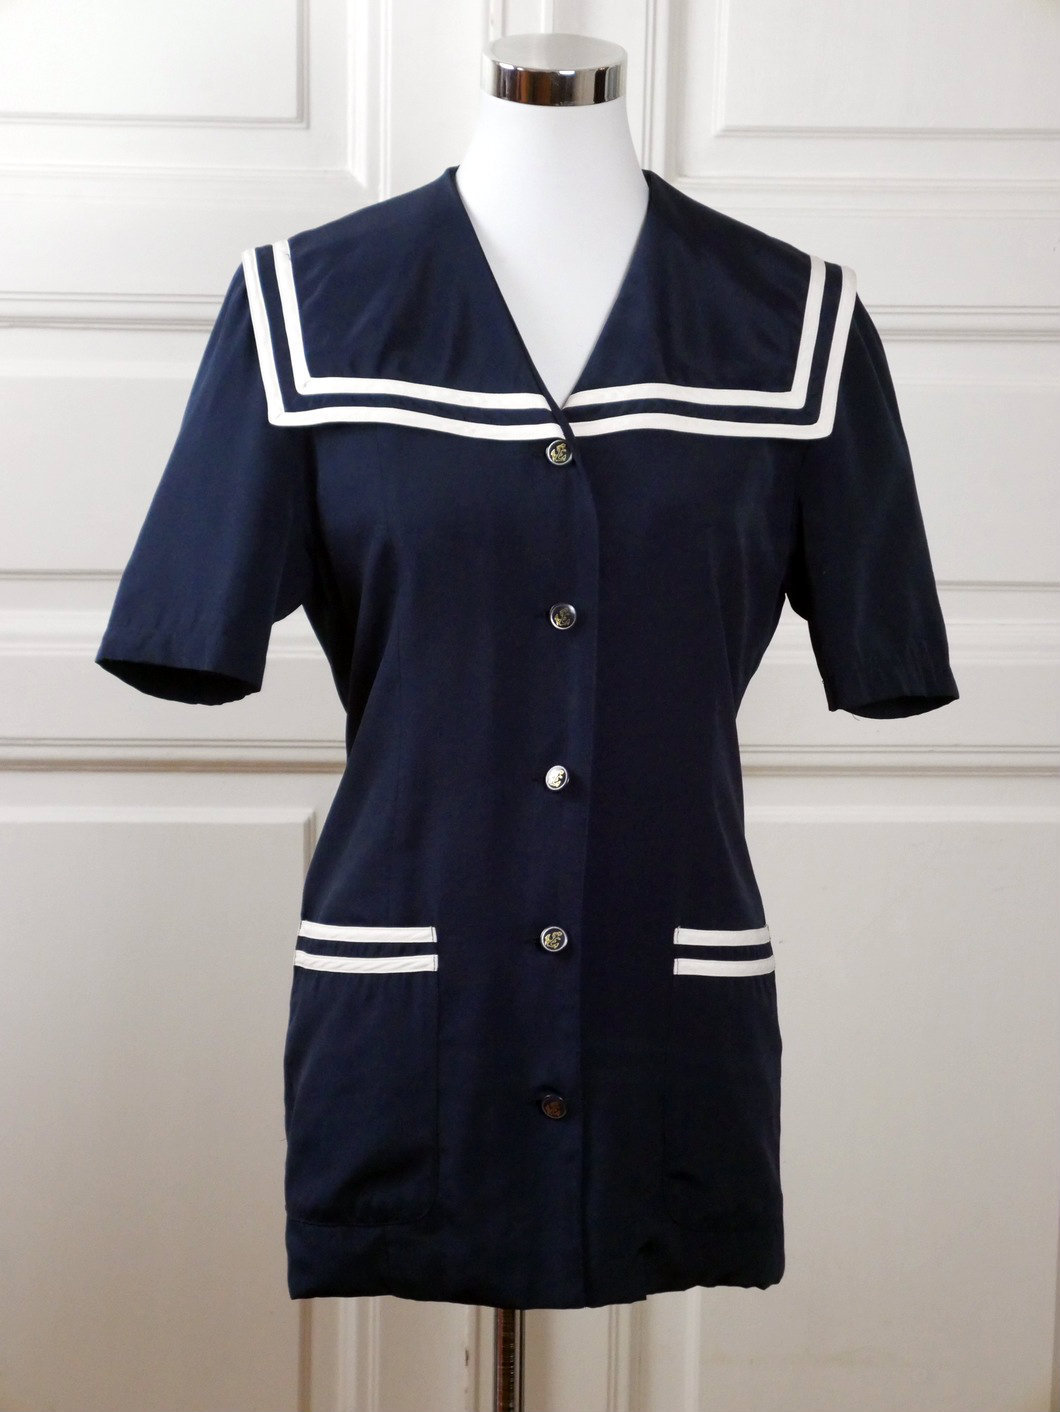 Sailor Blazer, Navy Blue & White European Vintage Nautical Jacket Size 10 Us, 14 Uk